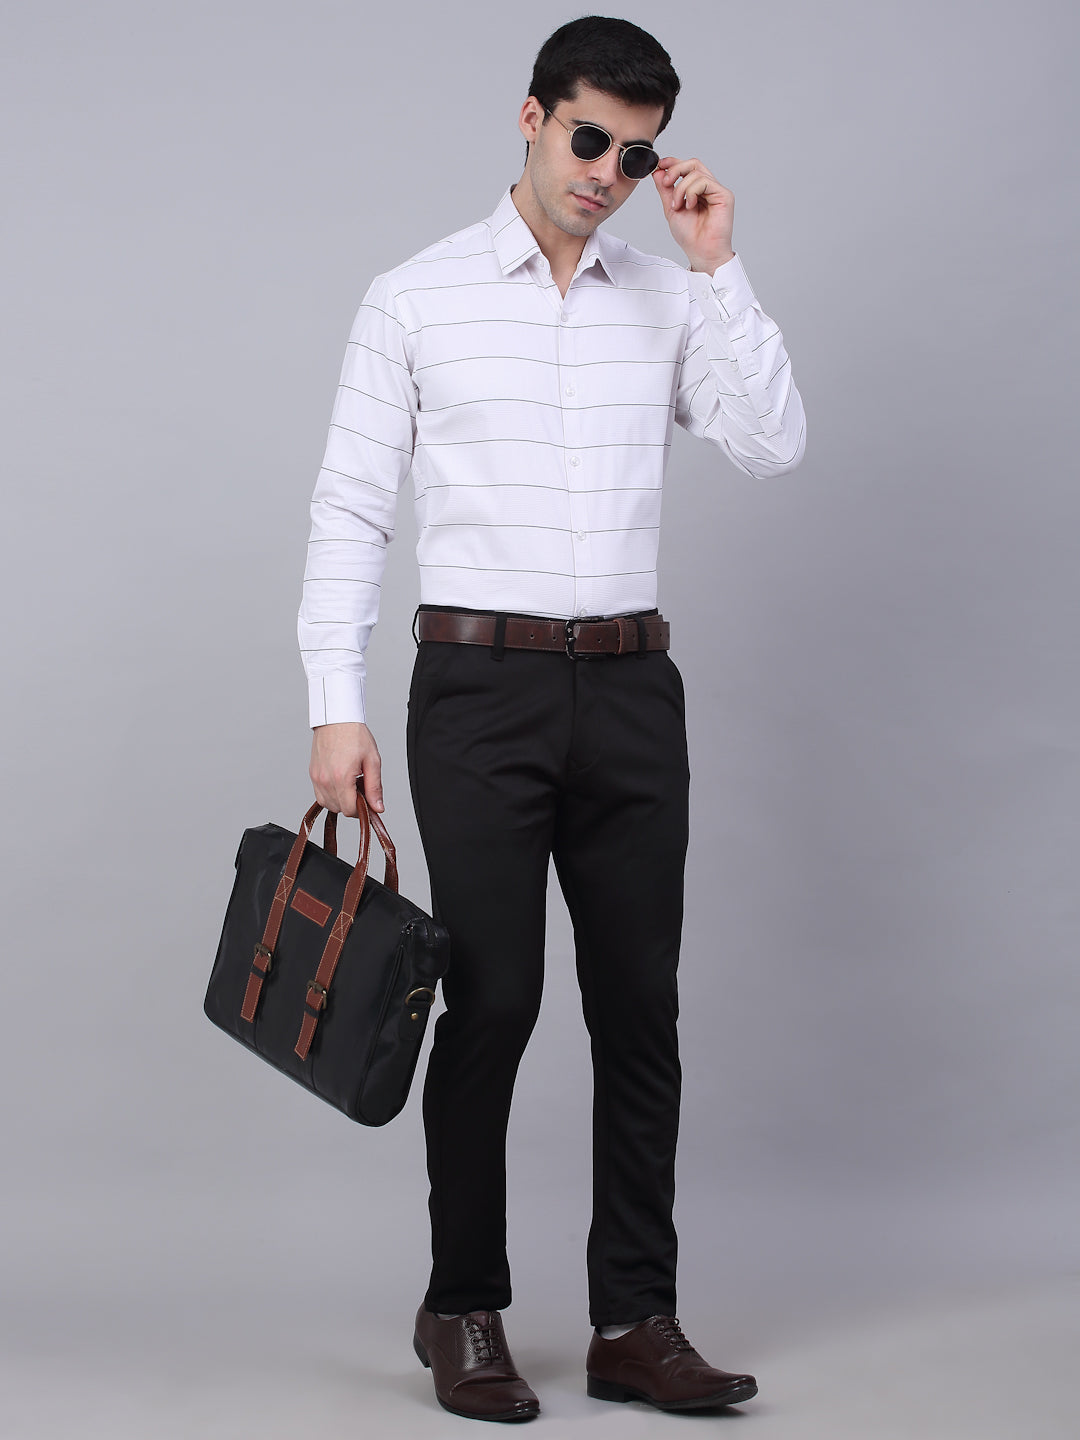 Men's White Horizontal Striped Formal Shirt